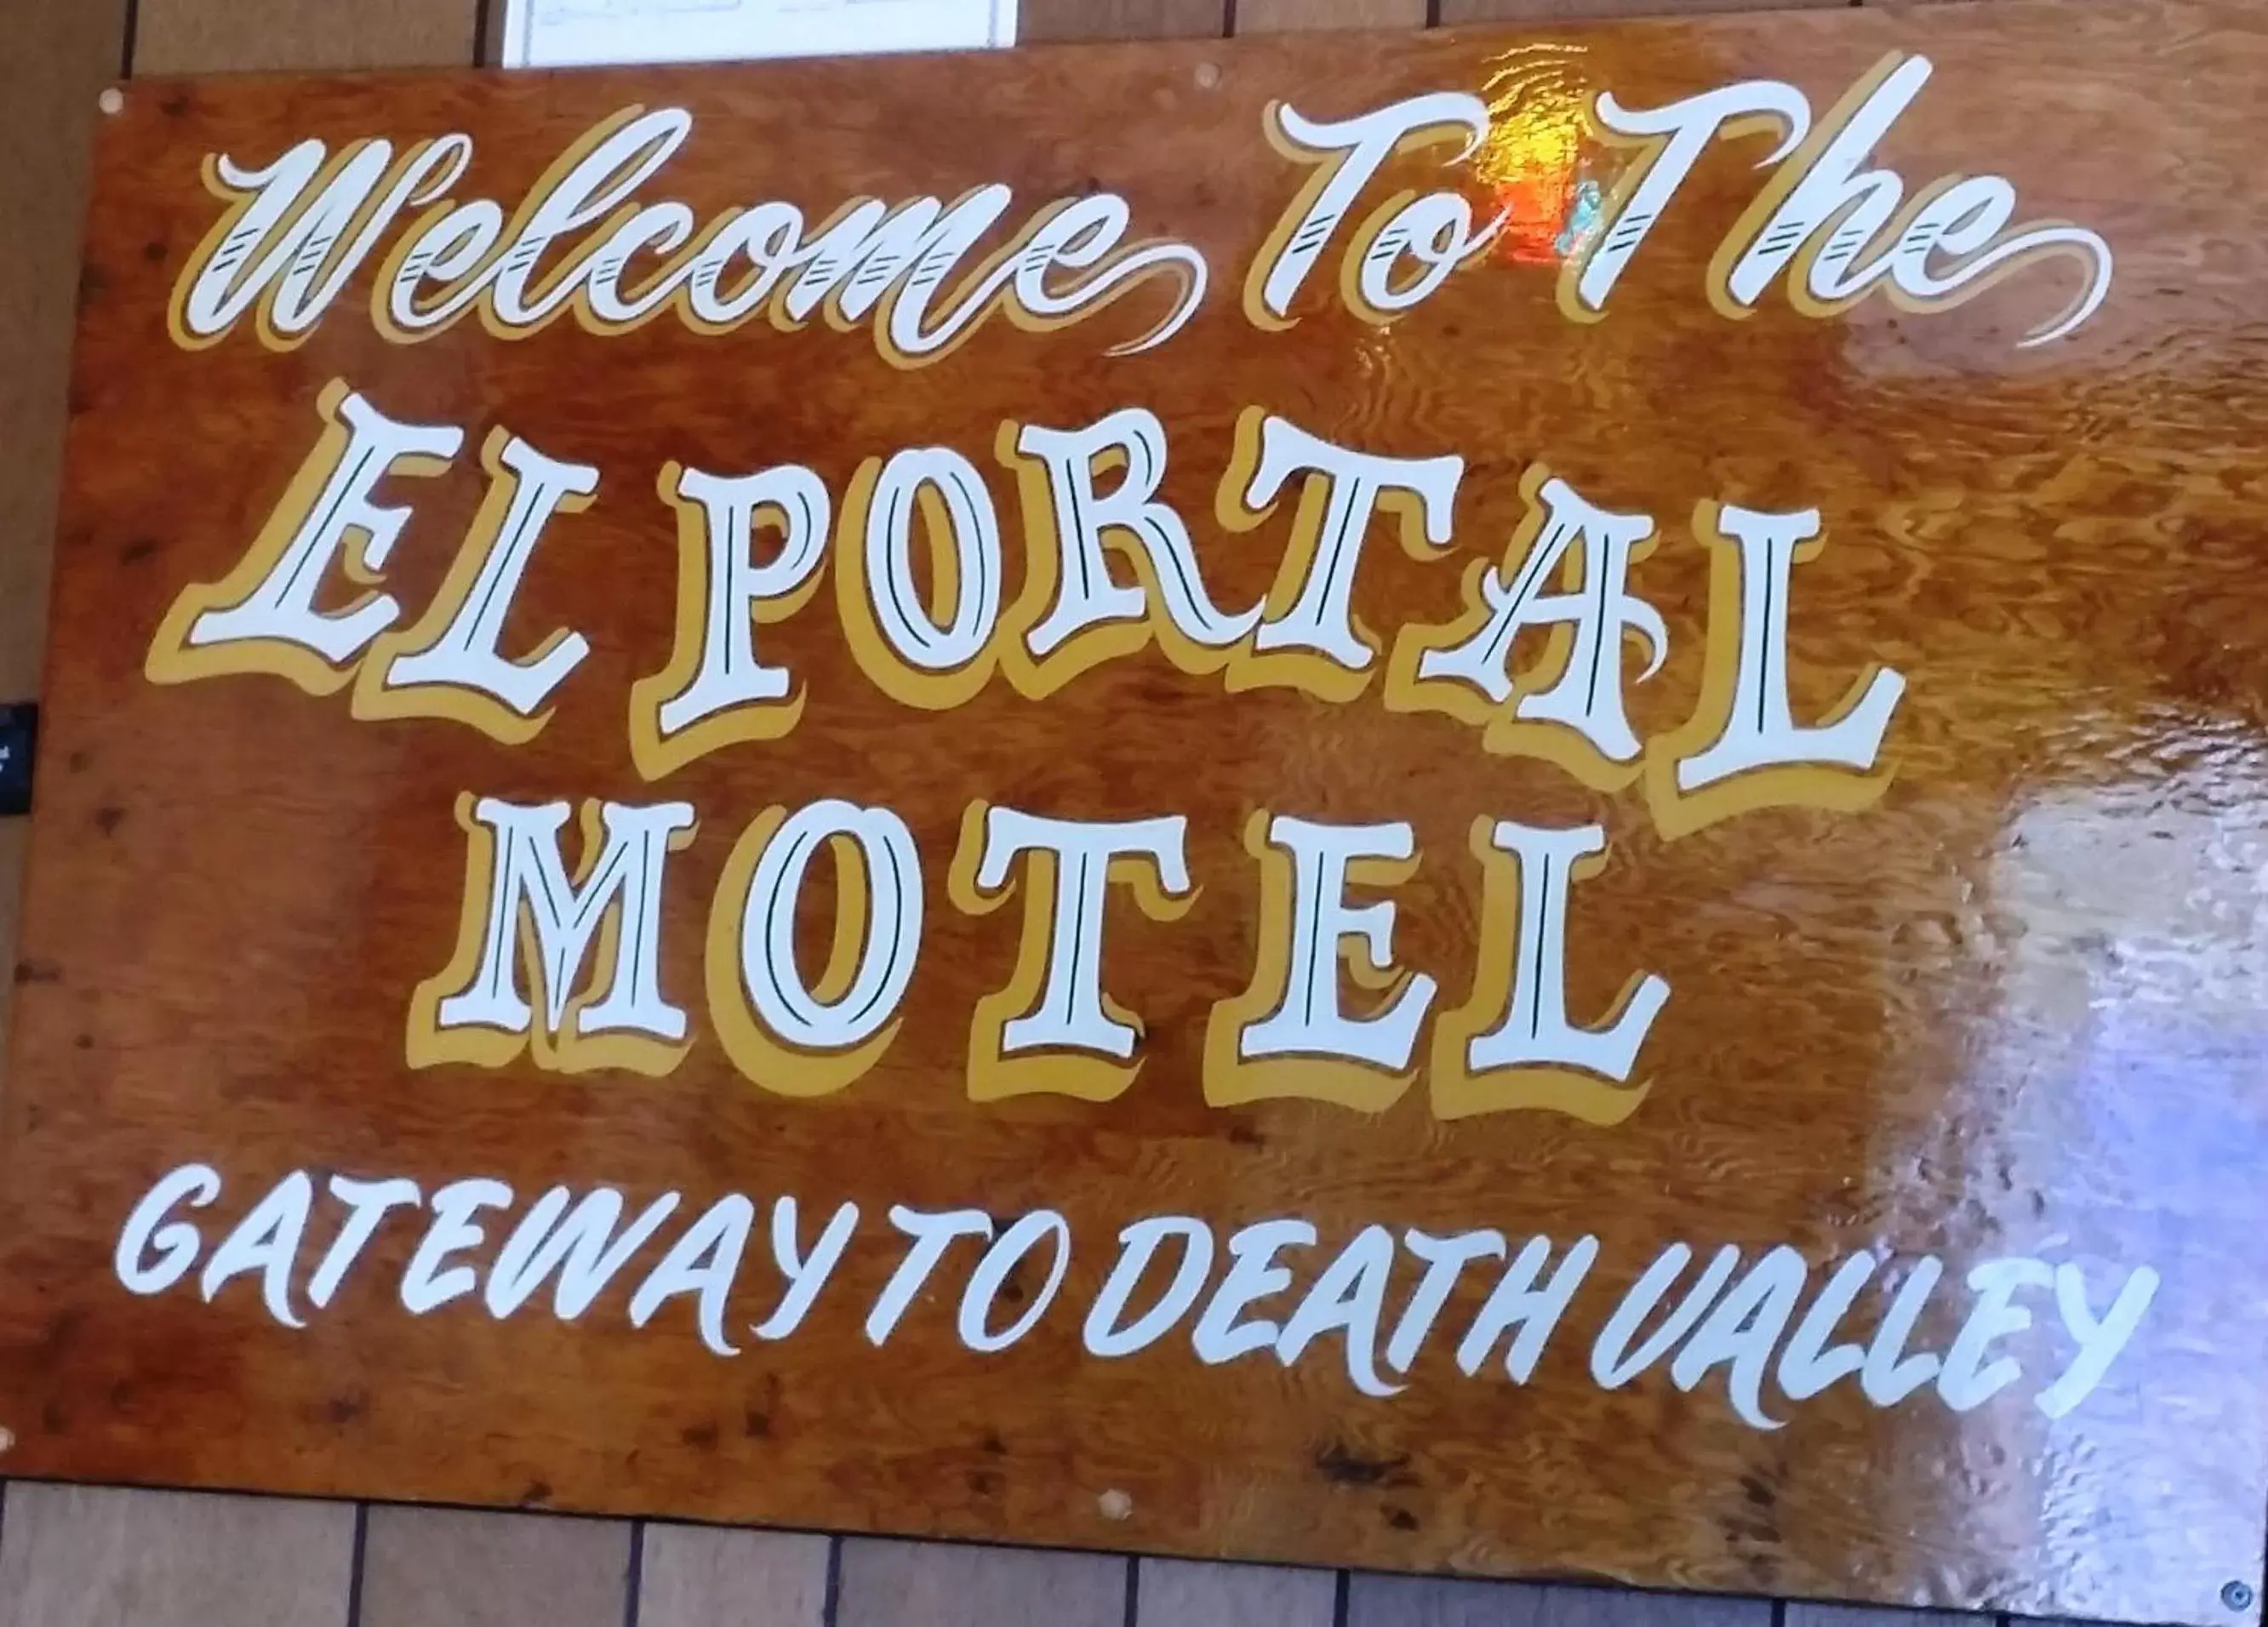 Decorative detail in El Portal Motel